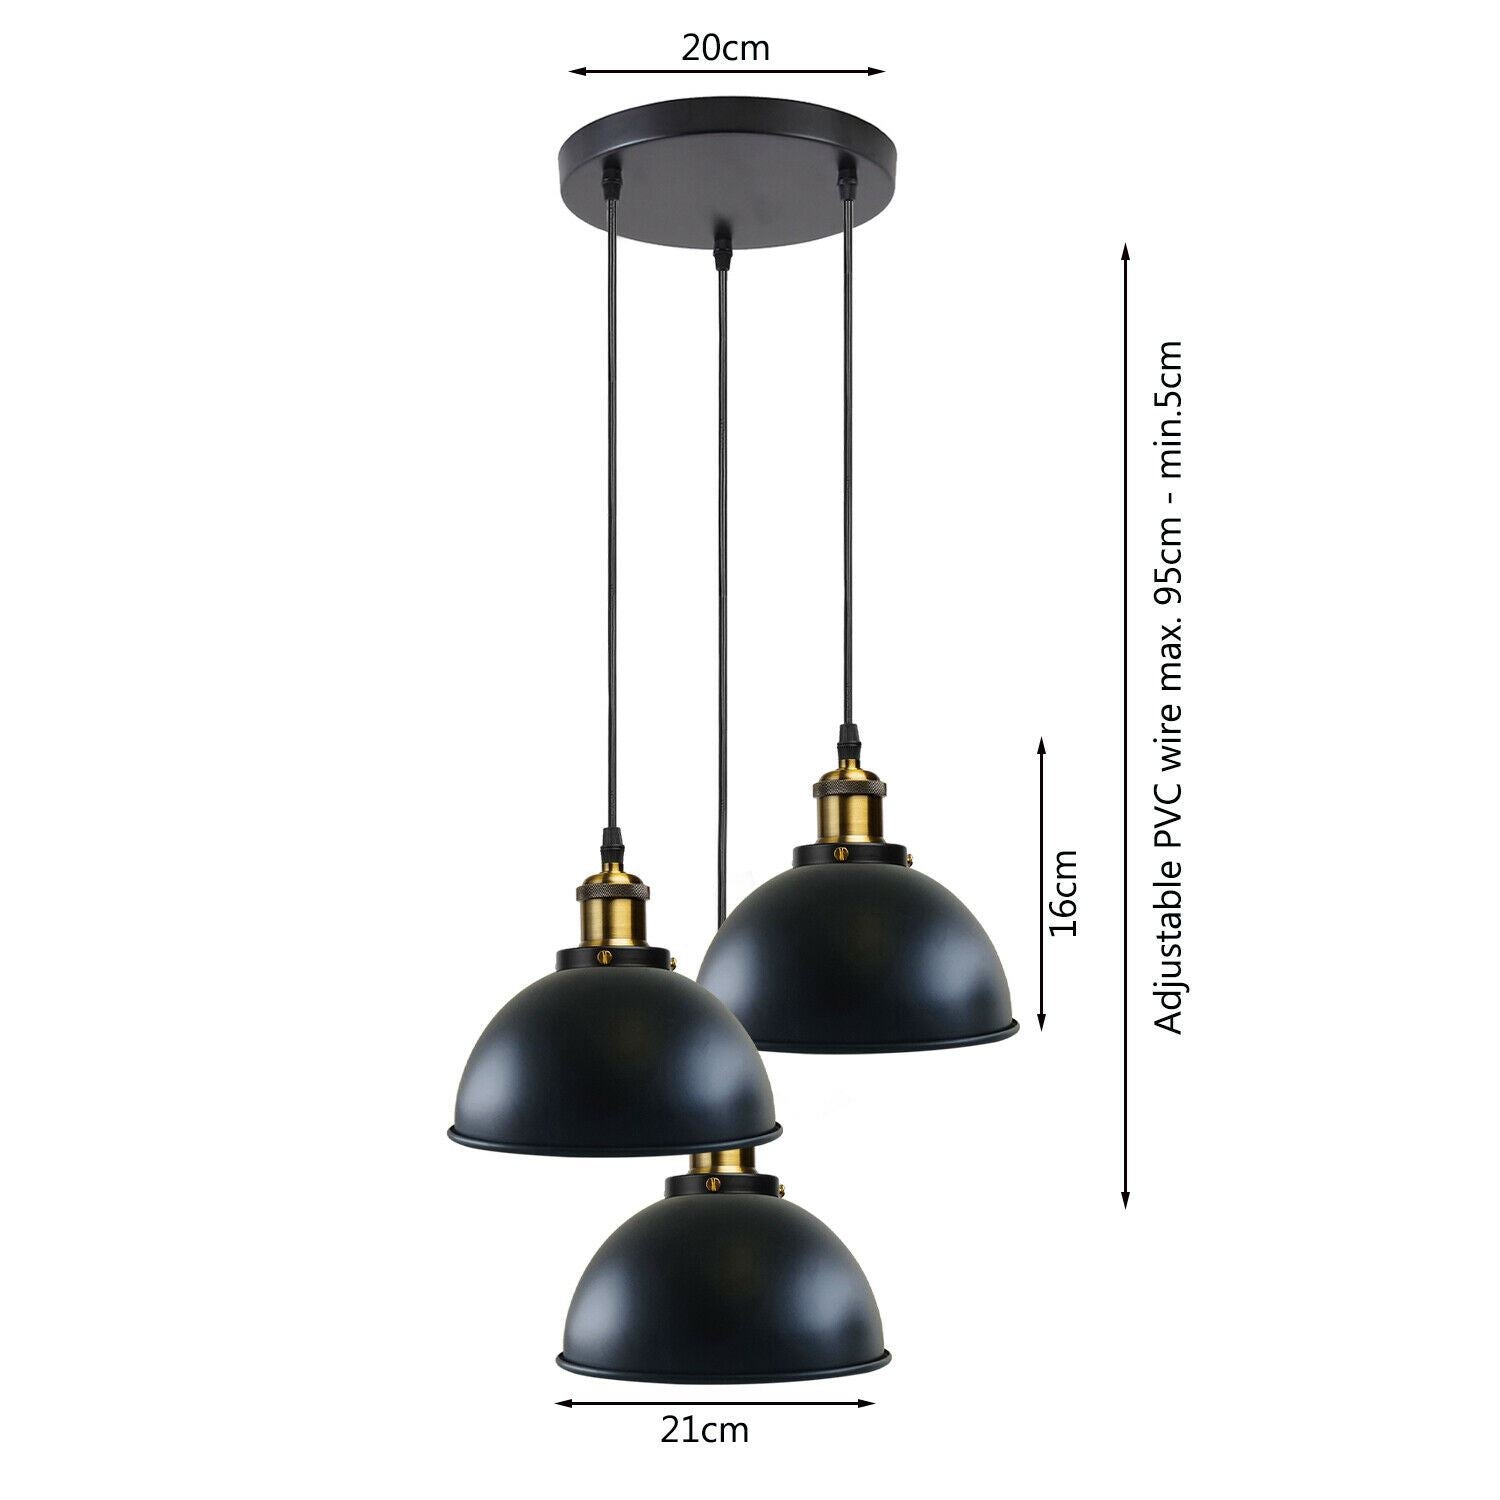 LEDSone Vintage Industrial Metal Ceiling Pendant Shade Modern Hanging Retro with various pattern Light black colour ~1259 - LEDSone UK Ltd